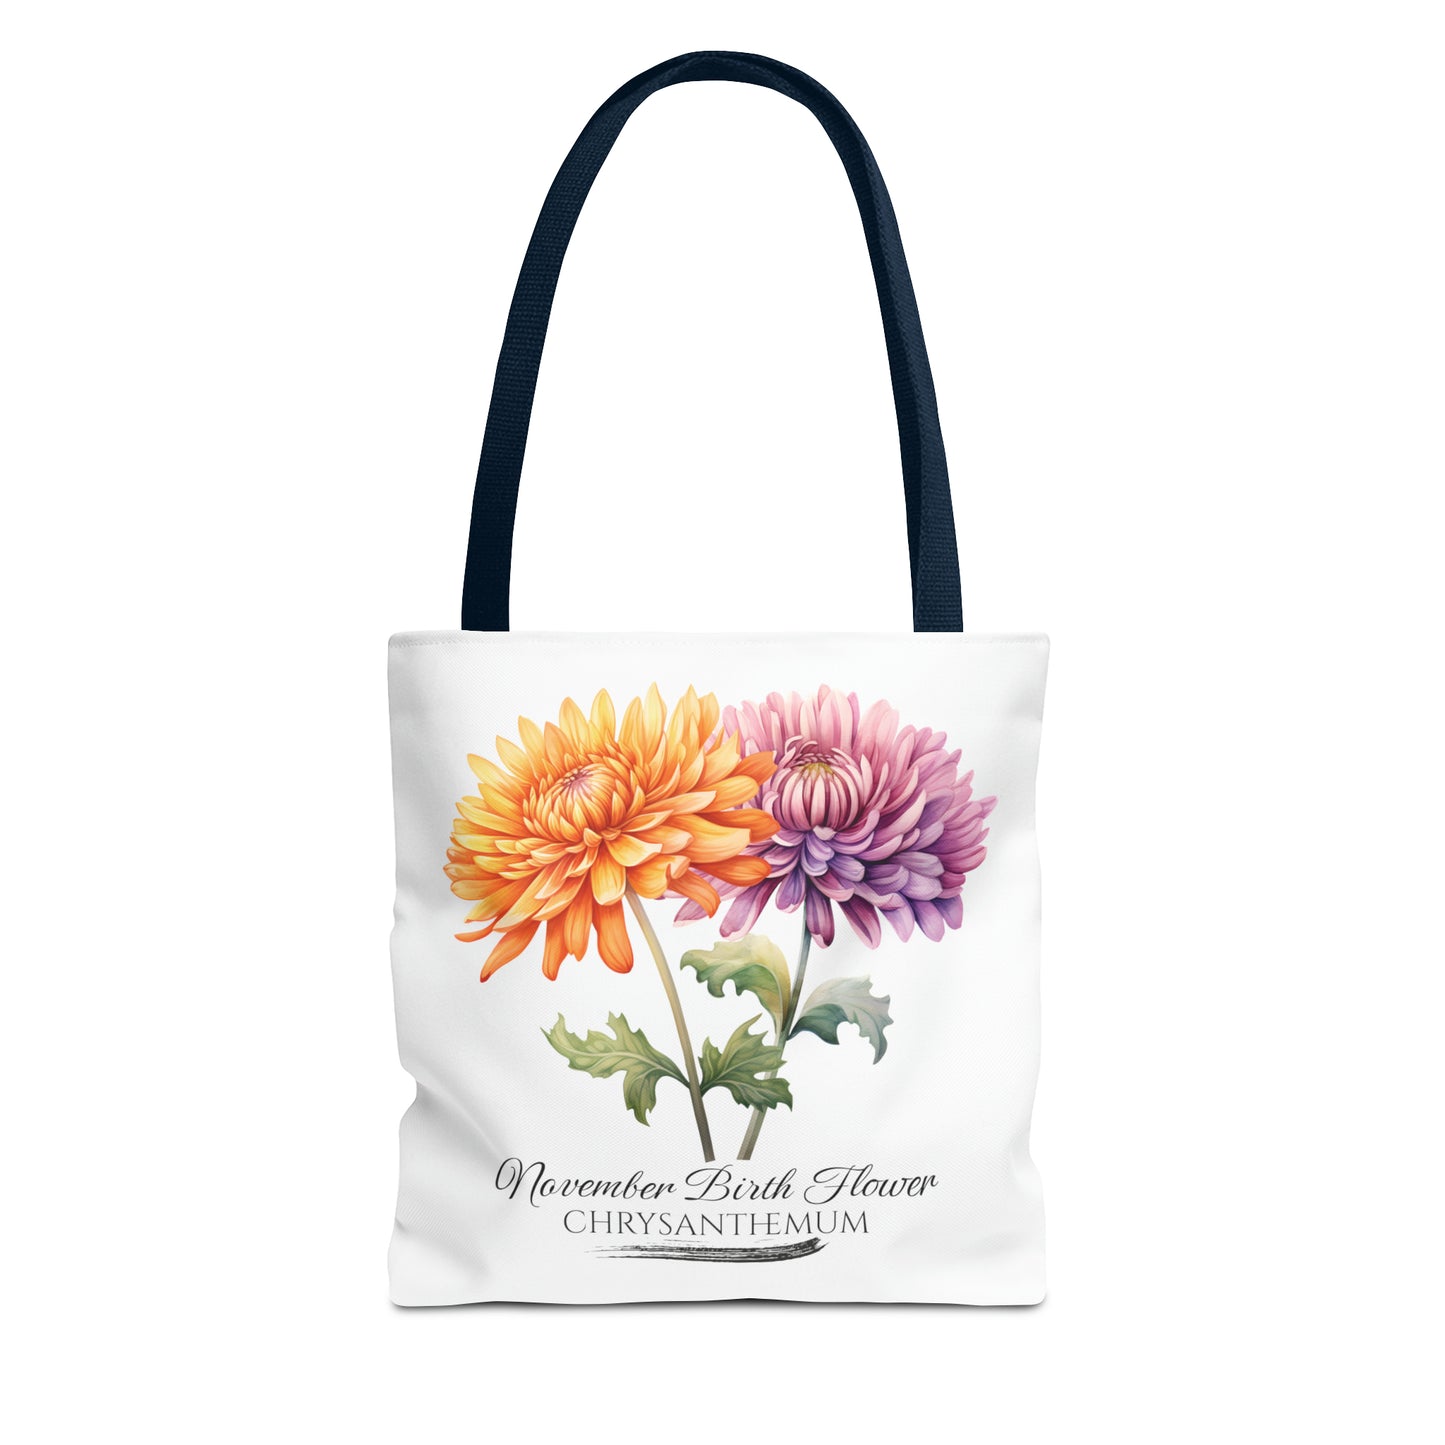 November Birth Flower: Chrysanthemum - Tote Bag (AOP)